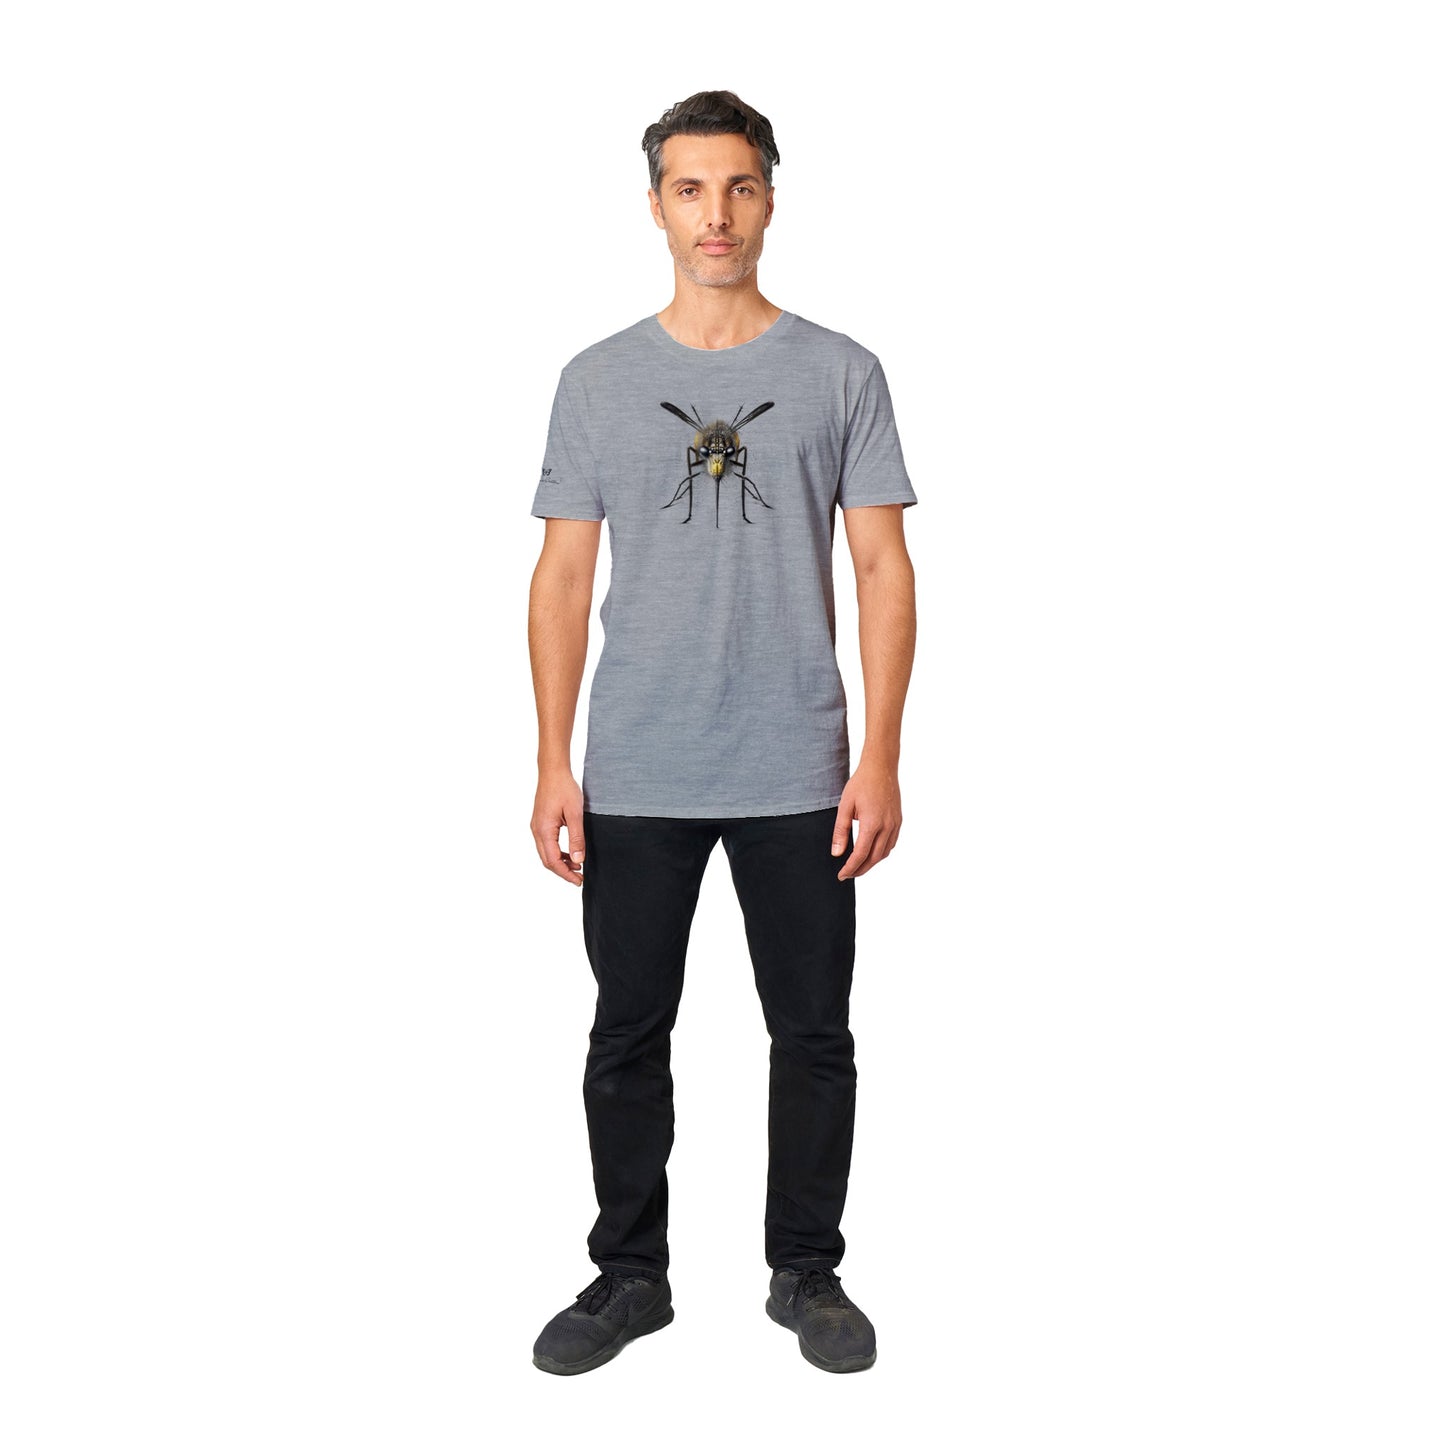 Mosquito - Unisex Crewneck T-shirt